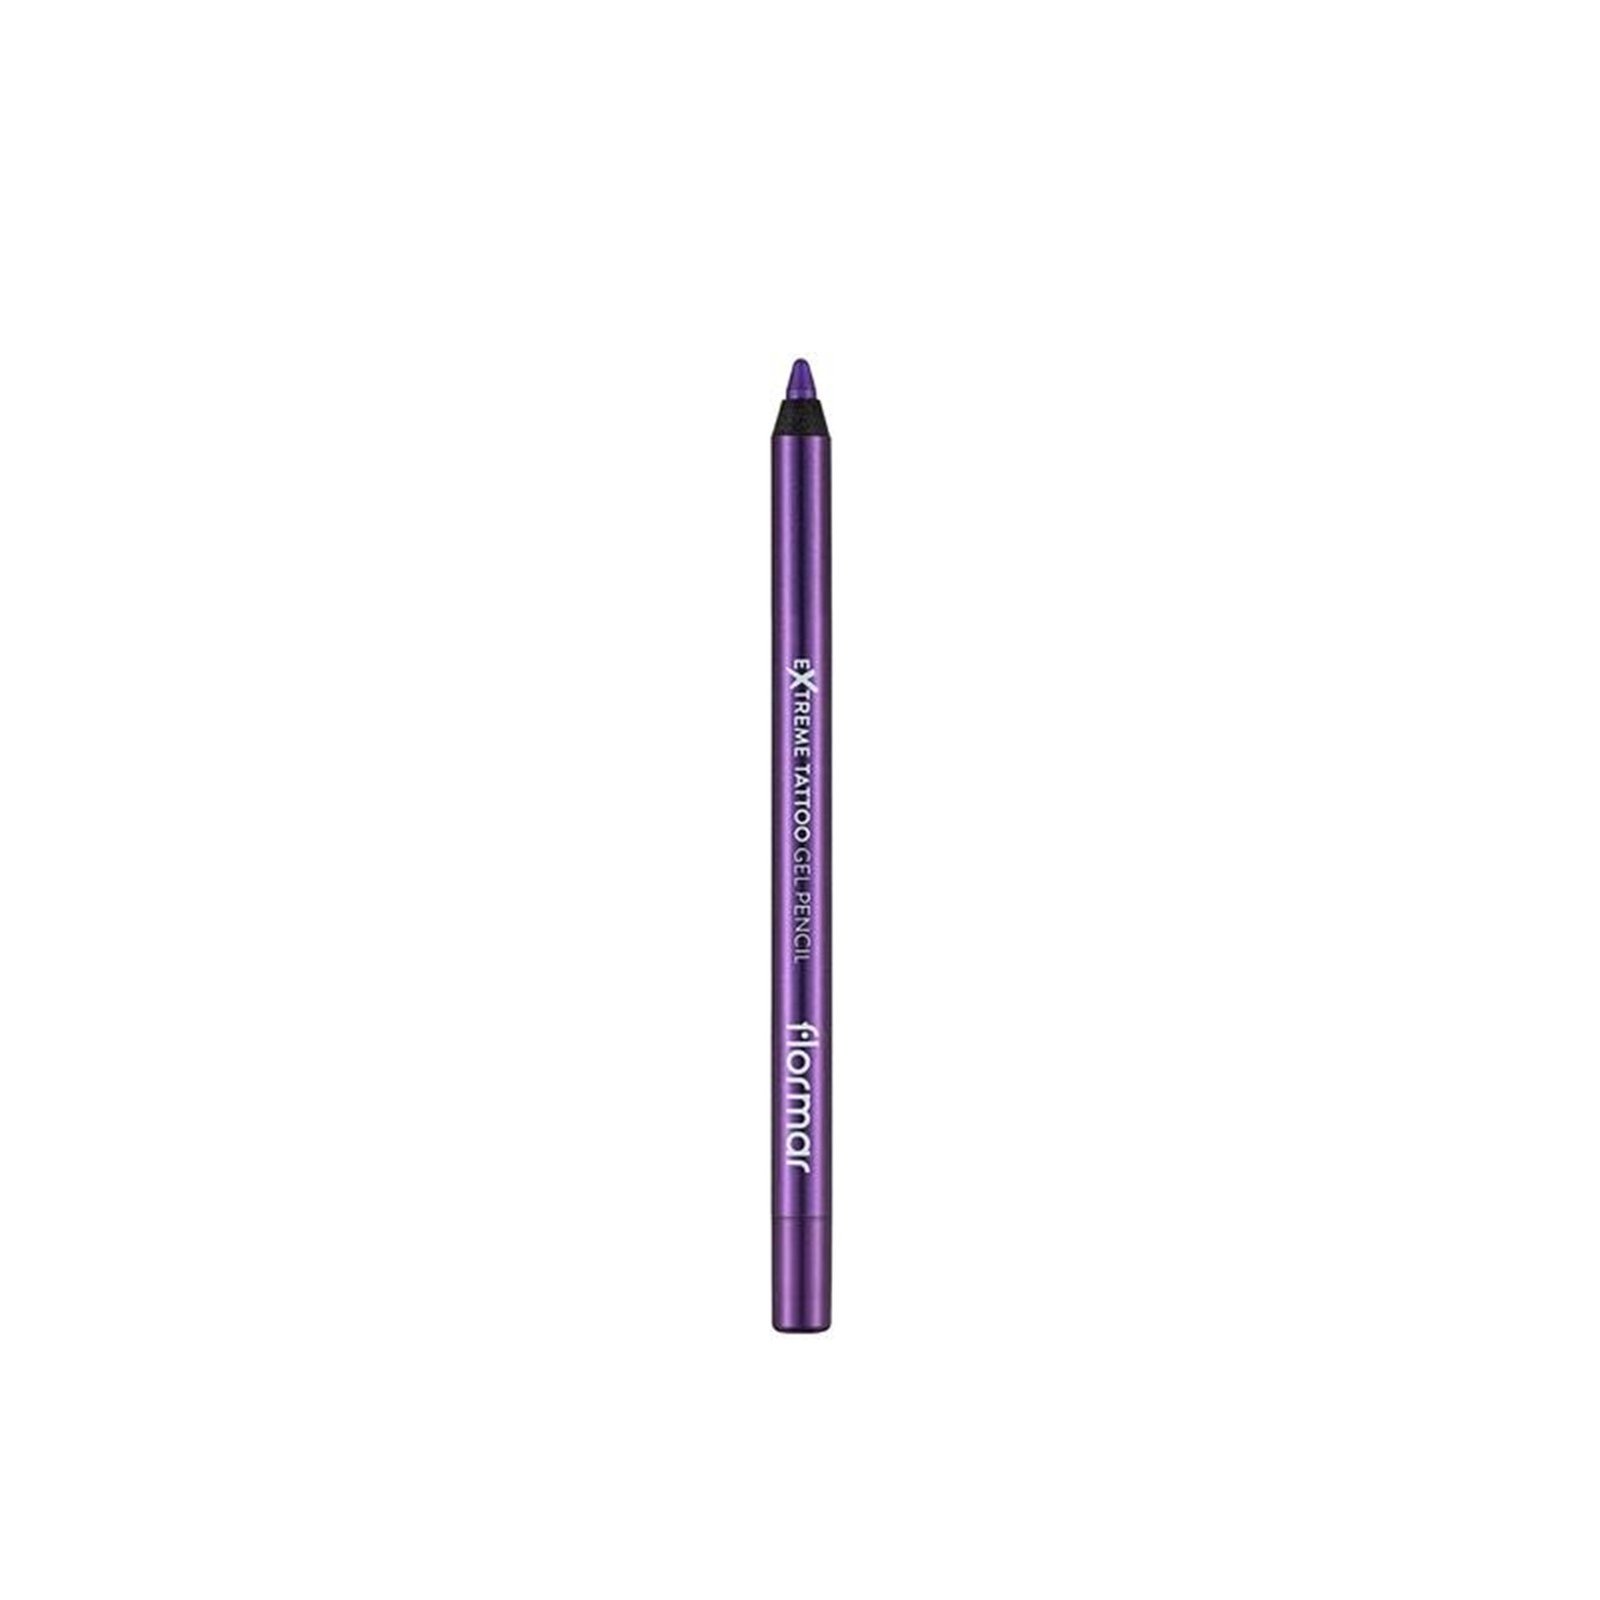 Flormar Extreme Tattoo Gel Pencil 11 Purple Blaze 1.2g (0.04 oz)